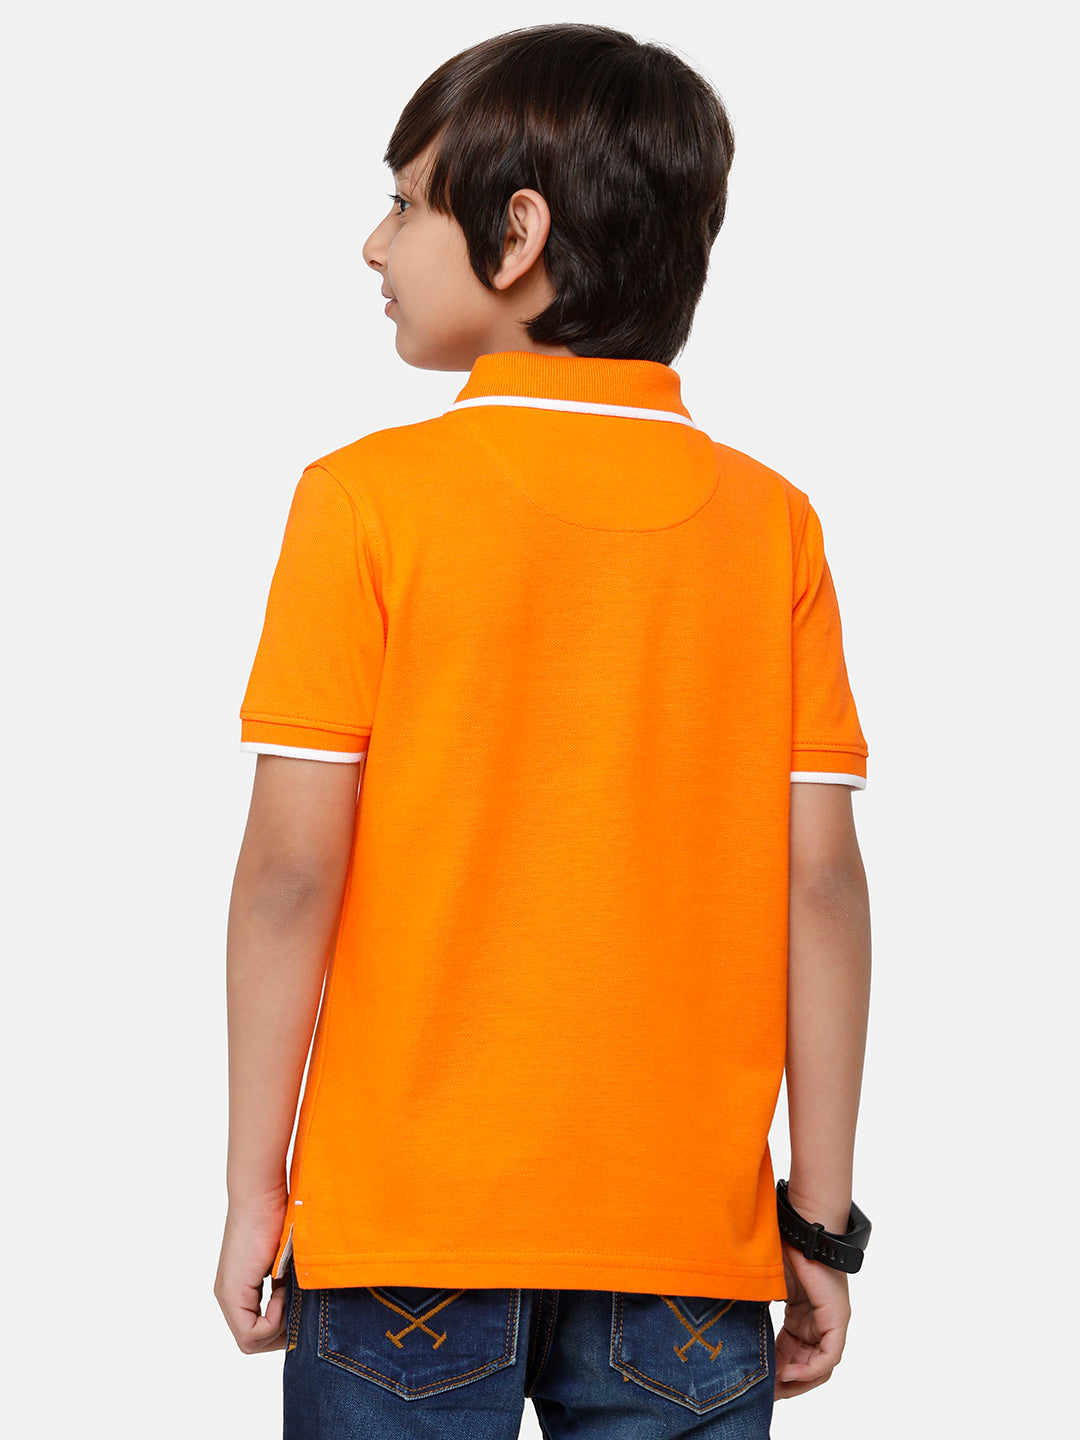 CP Boys Orange Solid Slim Fit Polo Neck T-Shirt T-shirt Classic Polo 